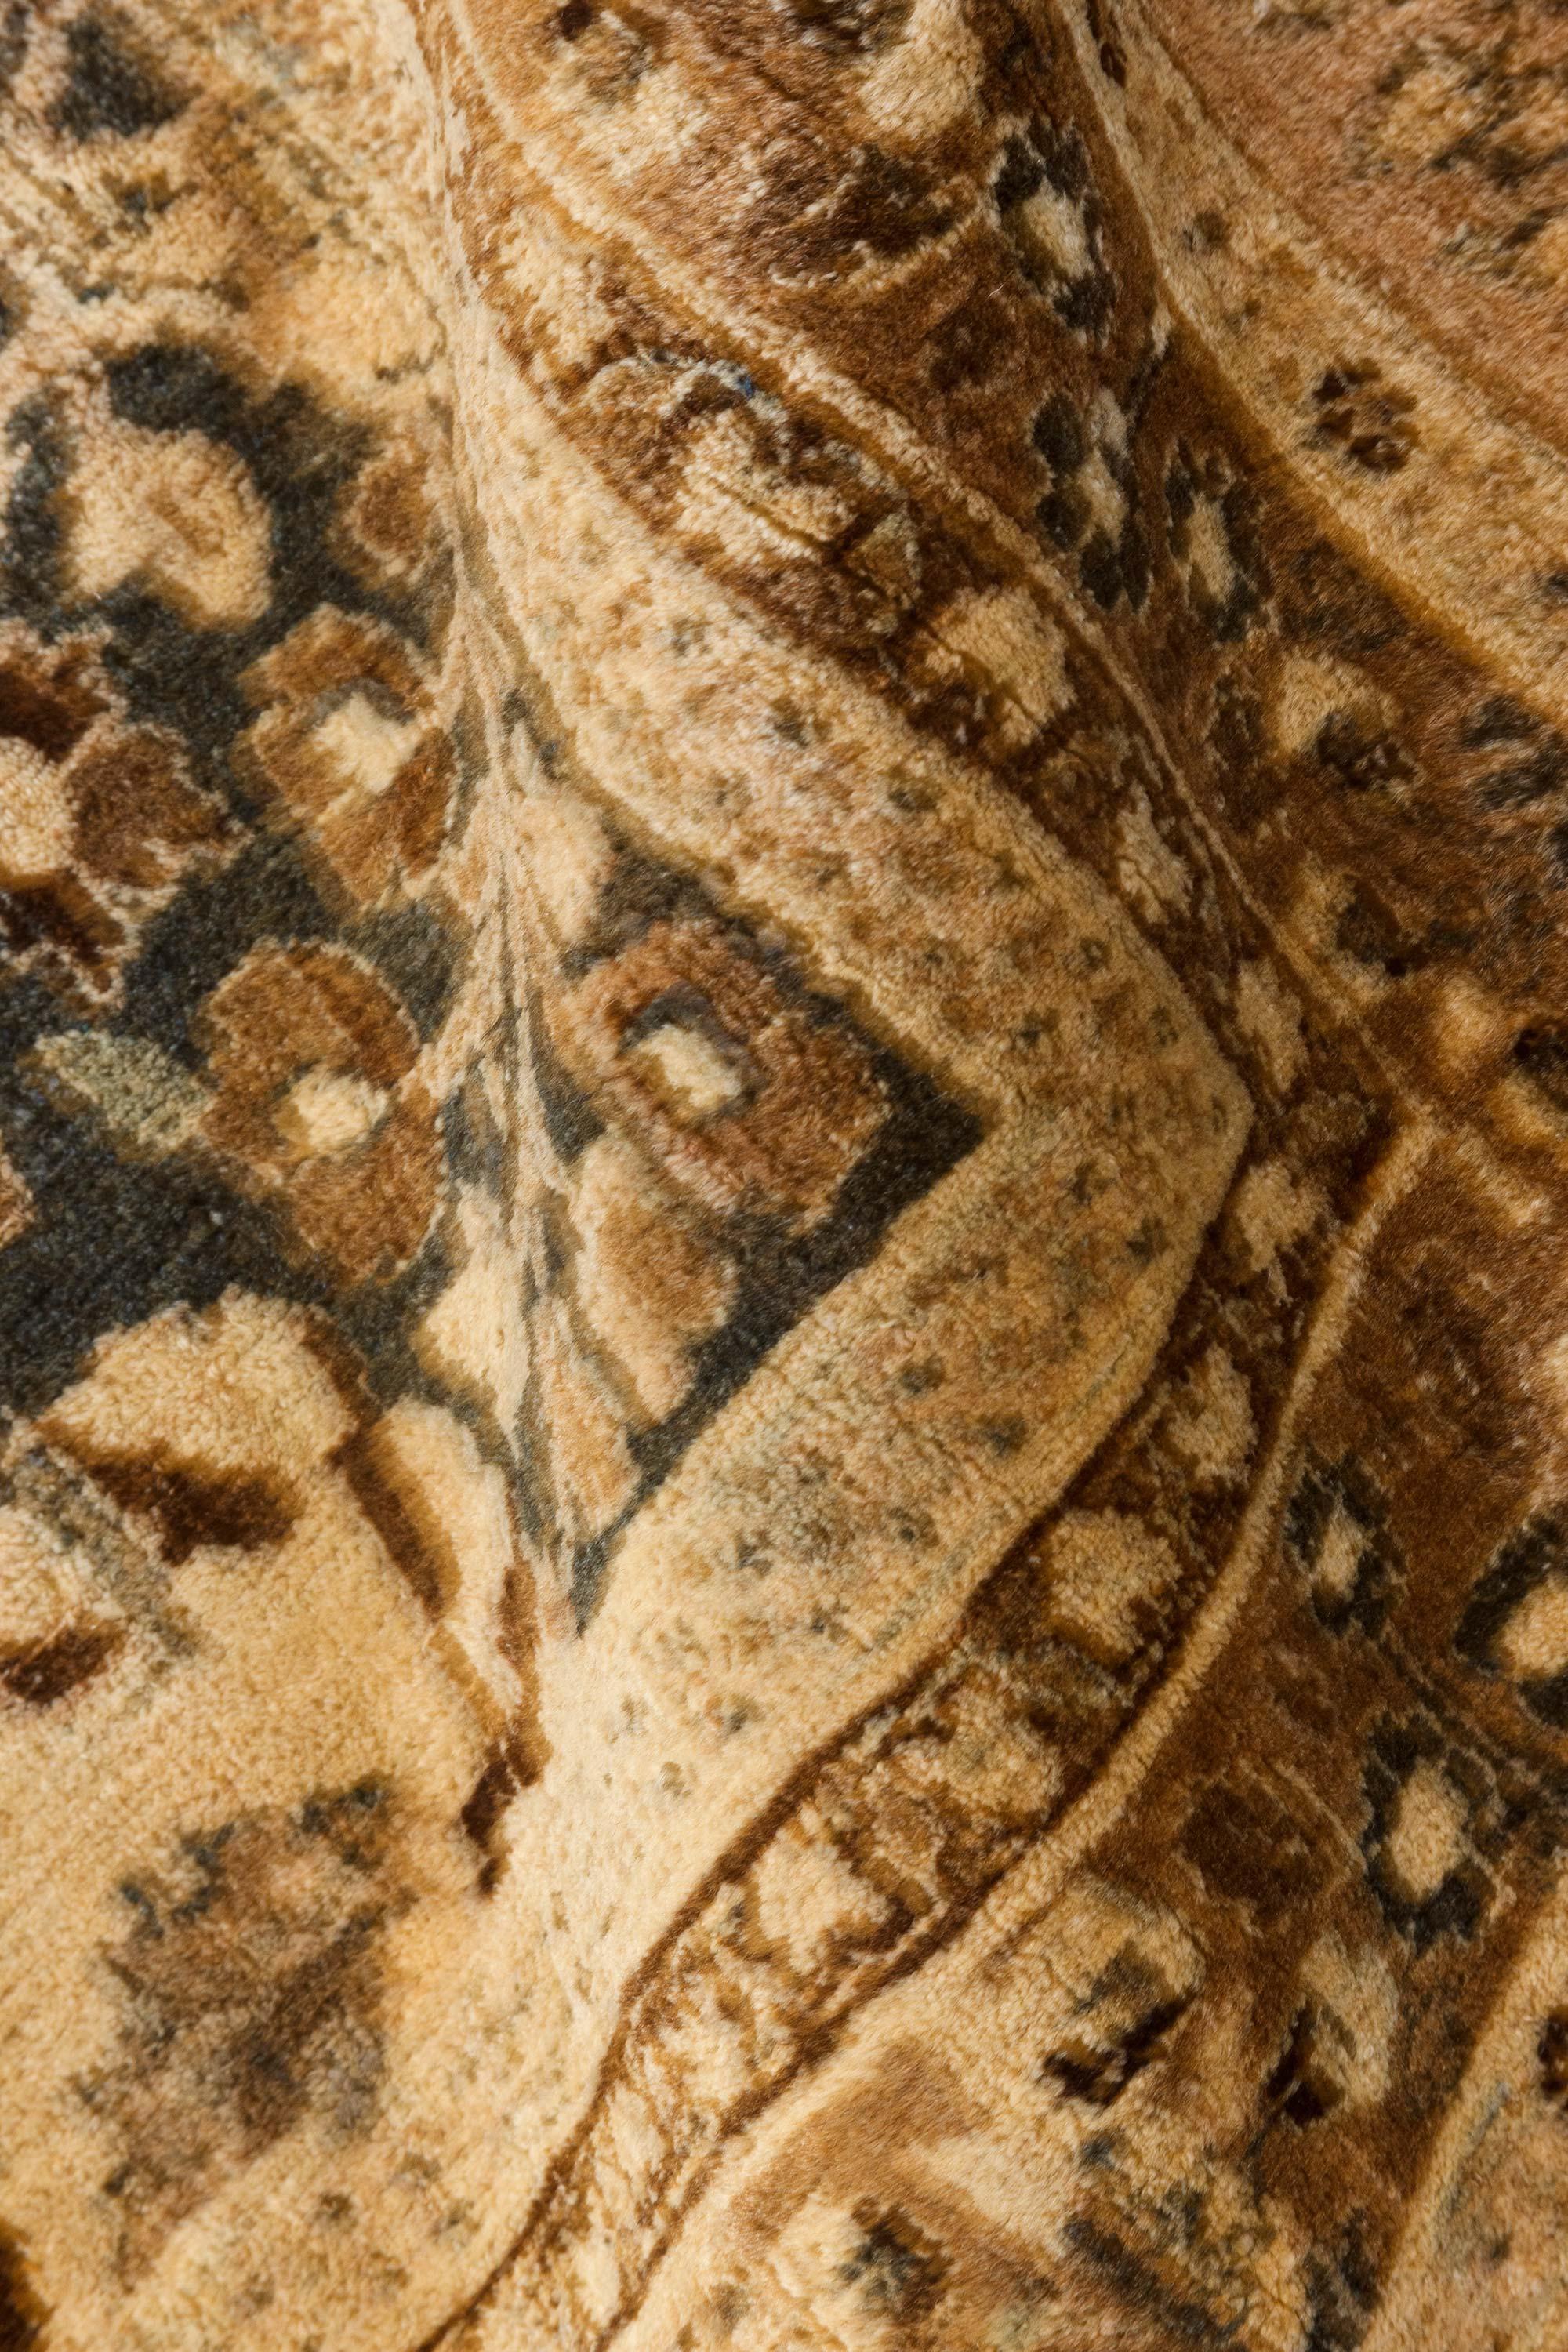 Antique Persian Khorassan handmade wool rug
Size: 11'6